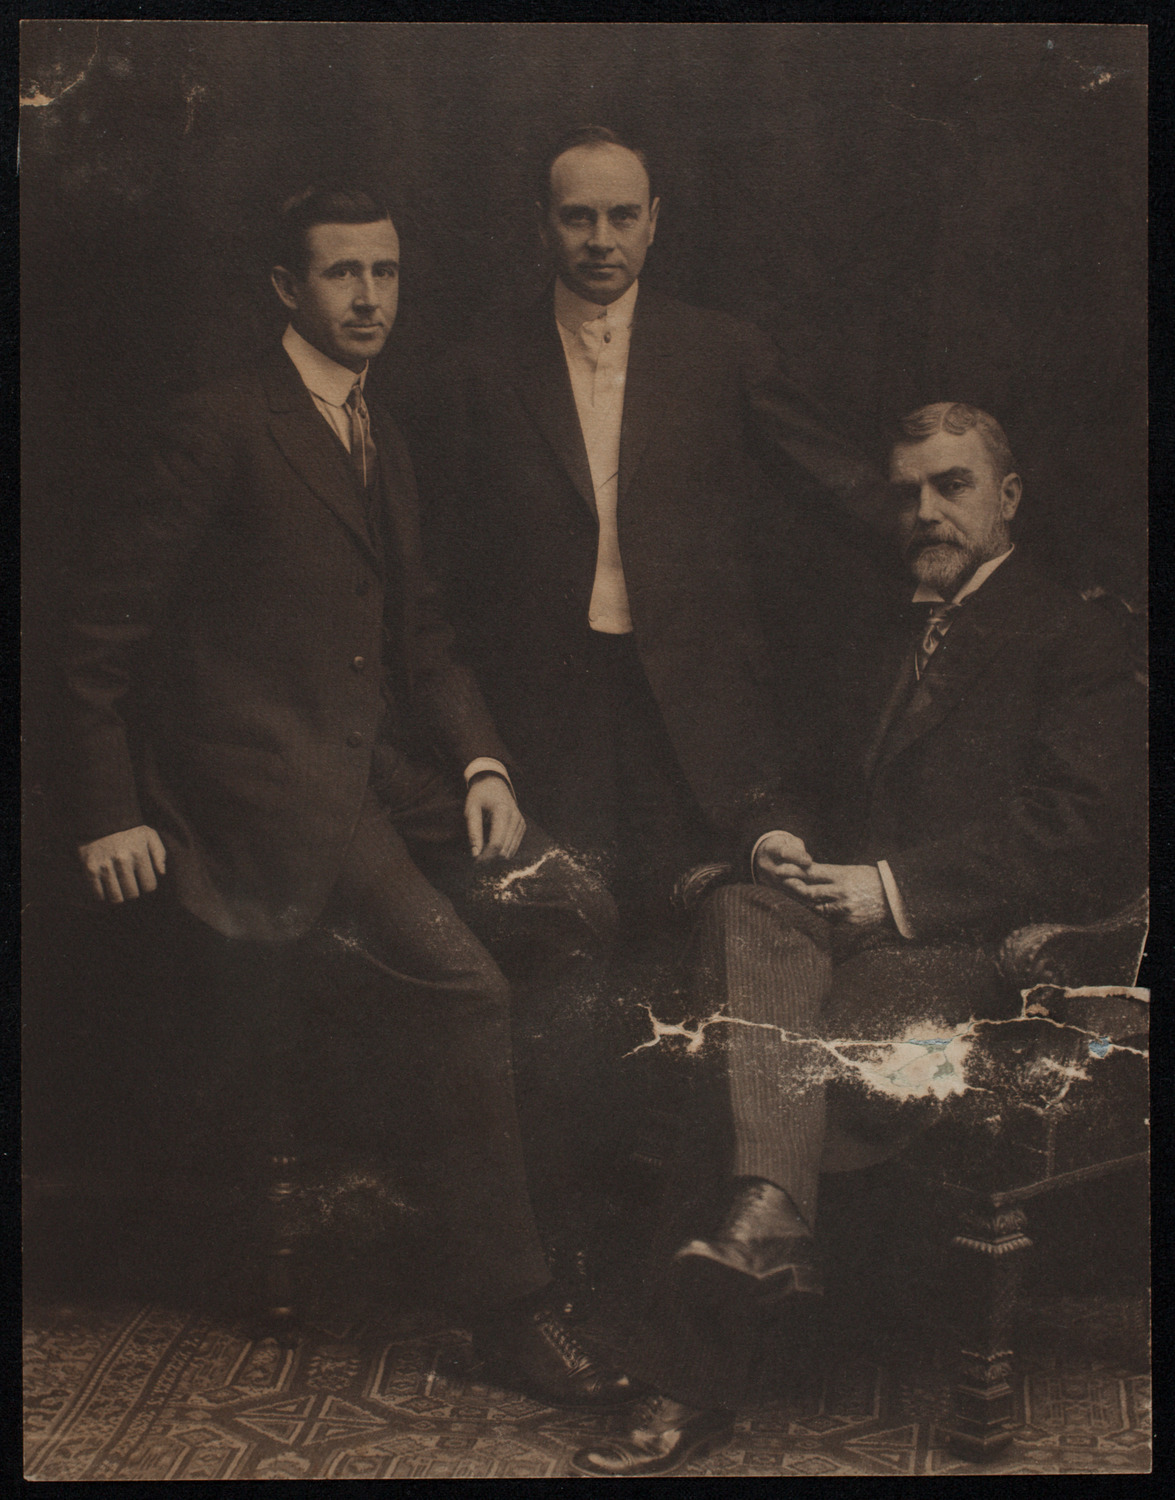 Frederick White, William W. Westcott, and Dwight L. Elmendorf